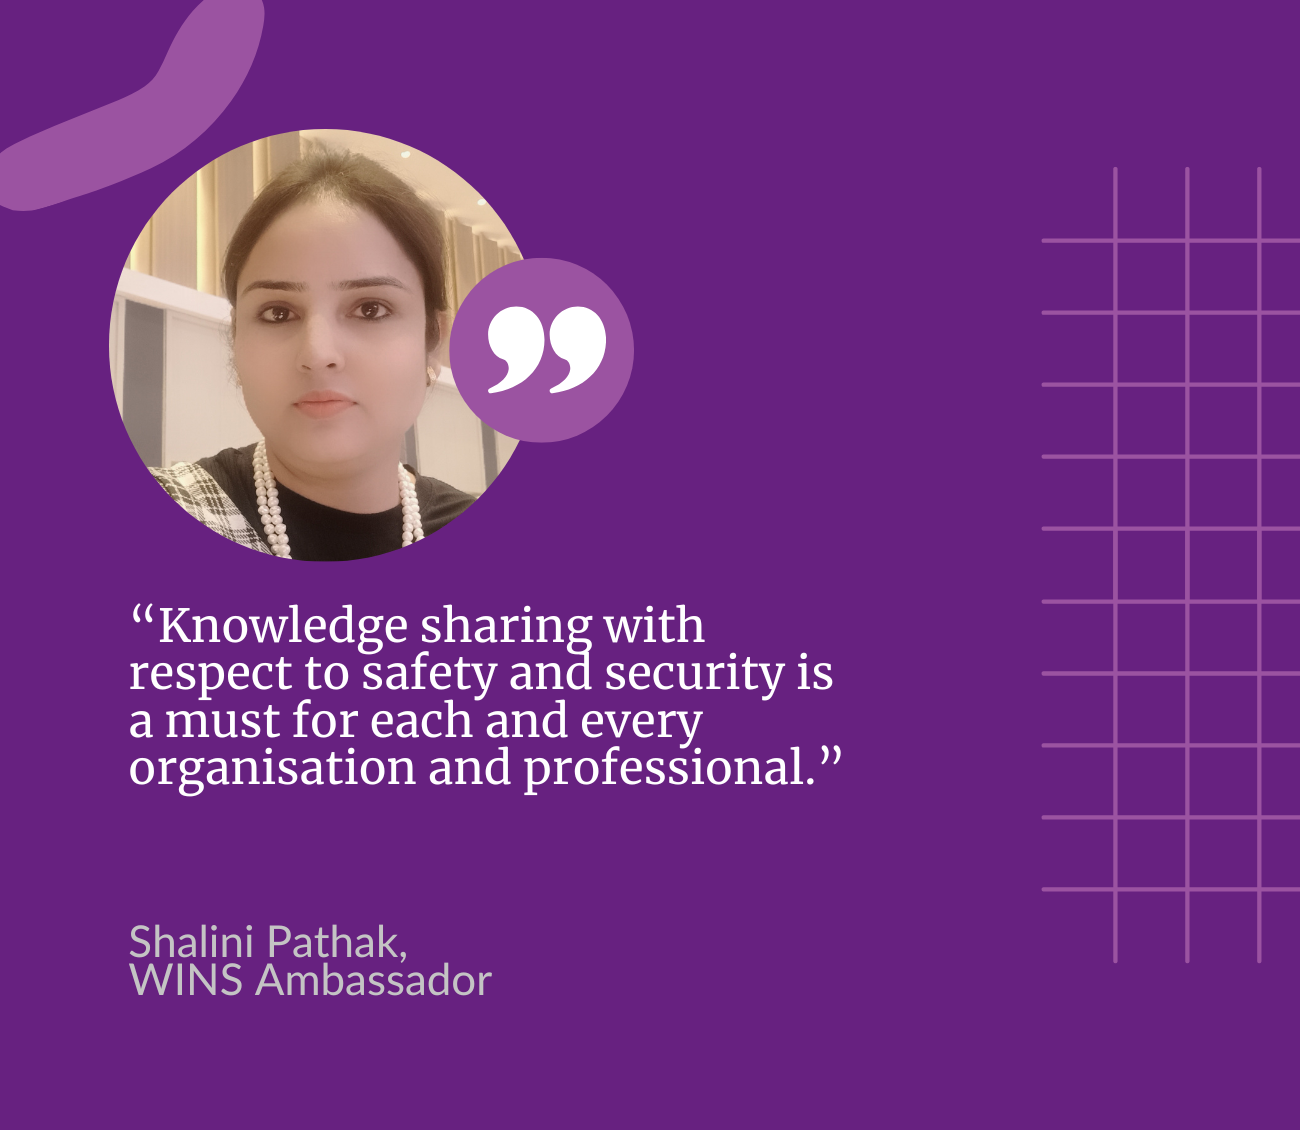 Meet a WINS Ambassador: Shalini Pathak